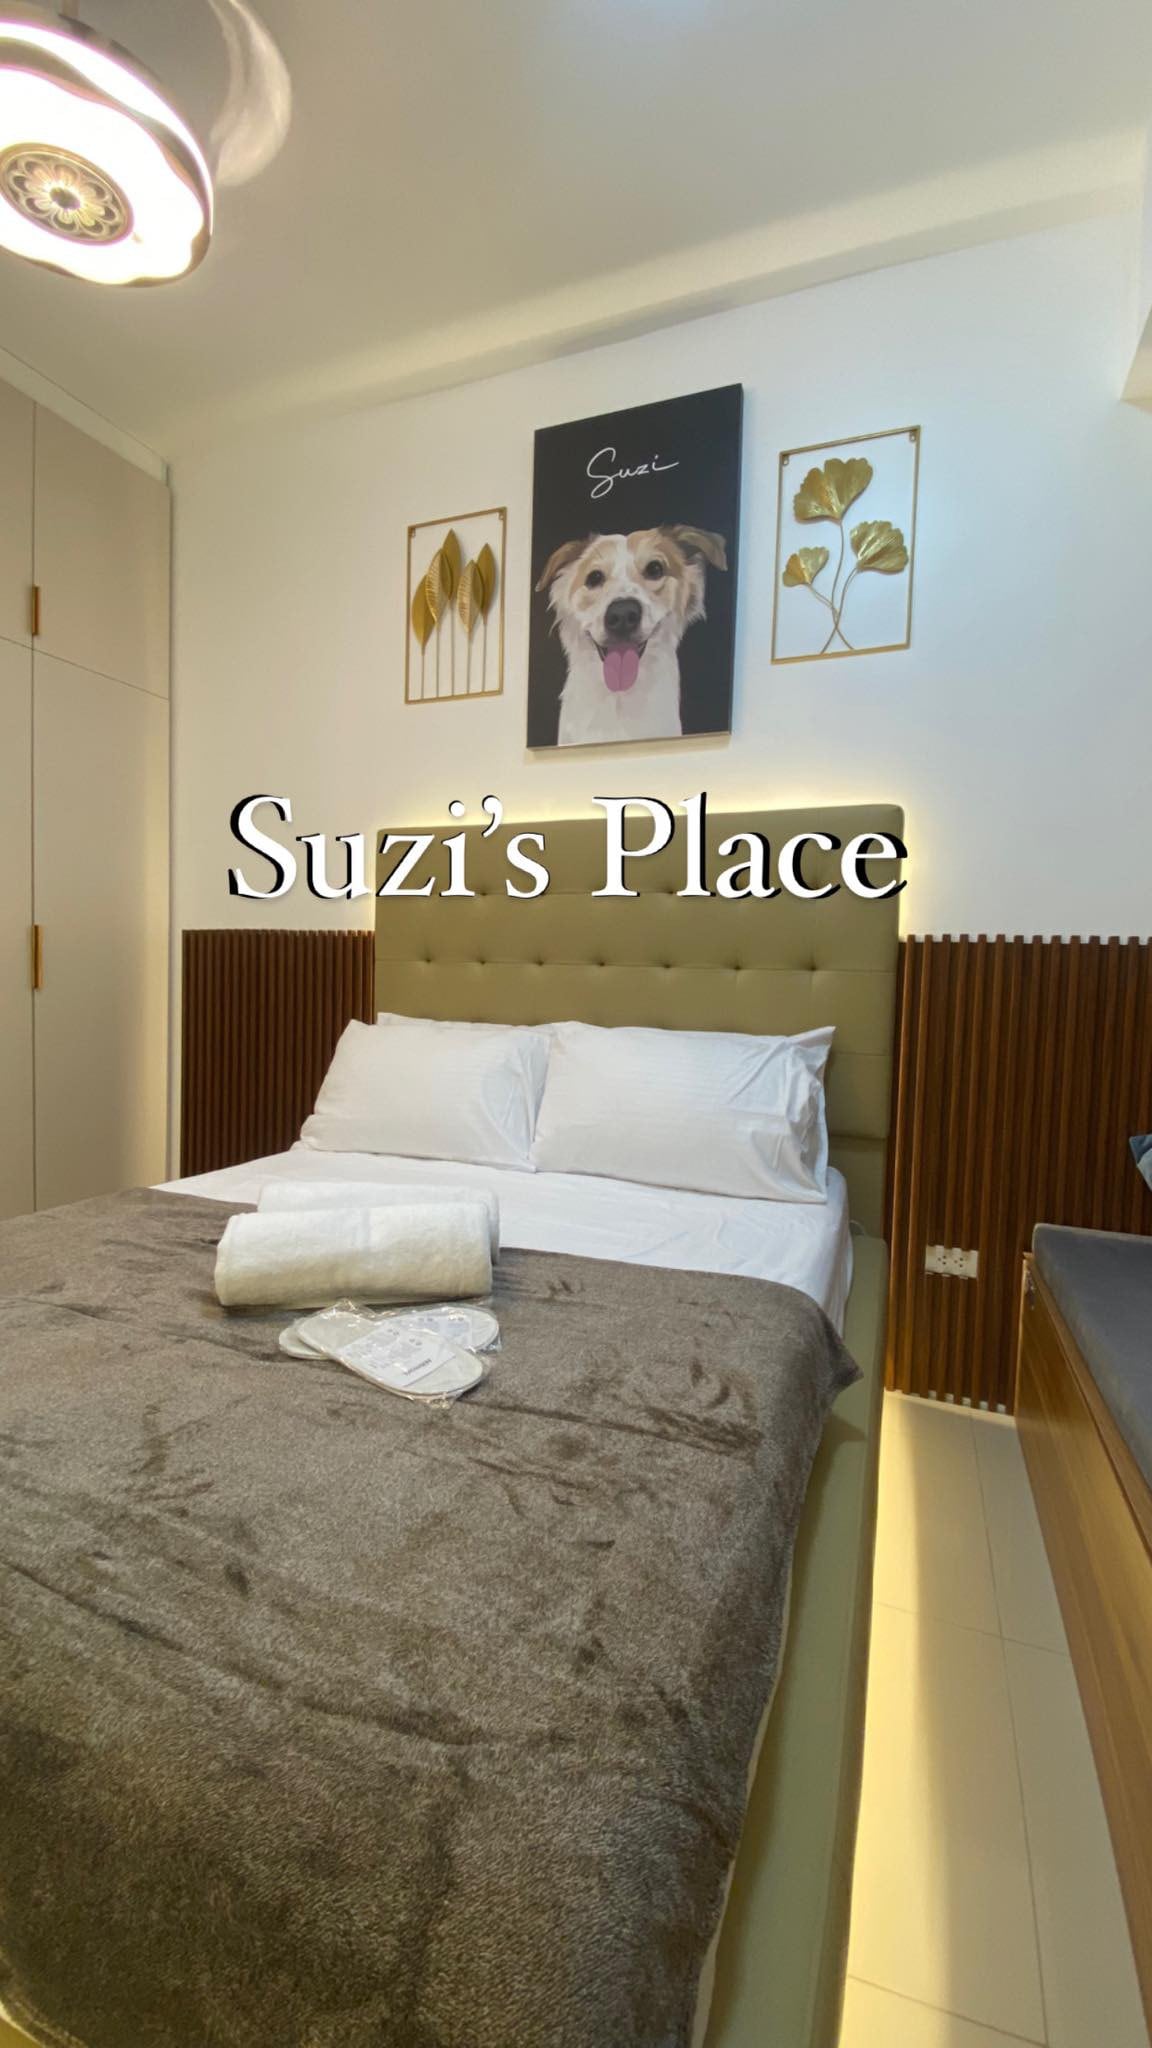 Suzi 's Place @ Green 2 Dasma免费无线网络| Netflix